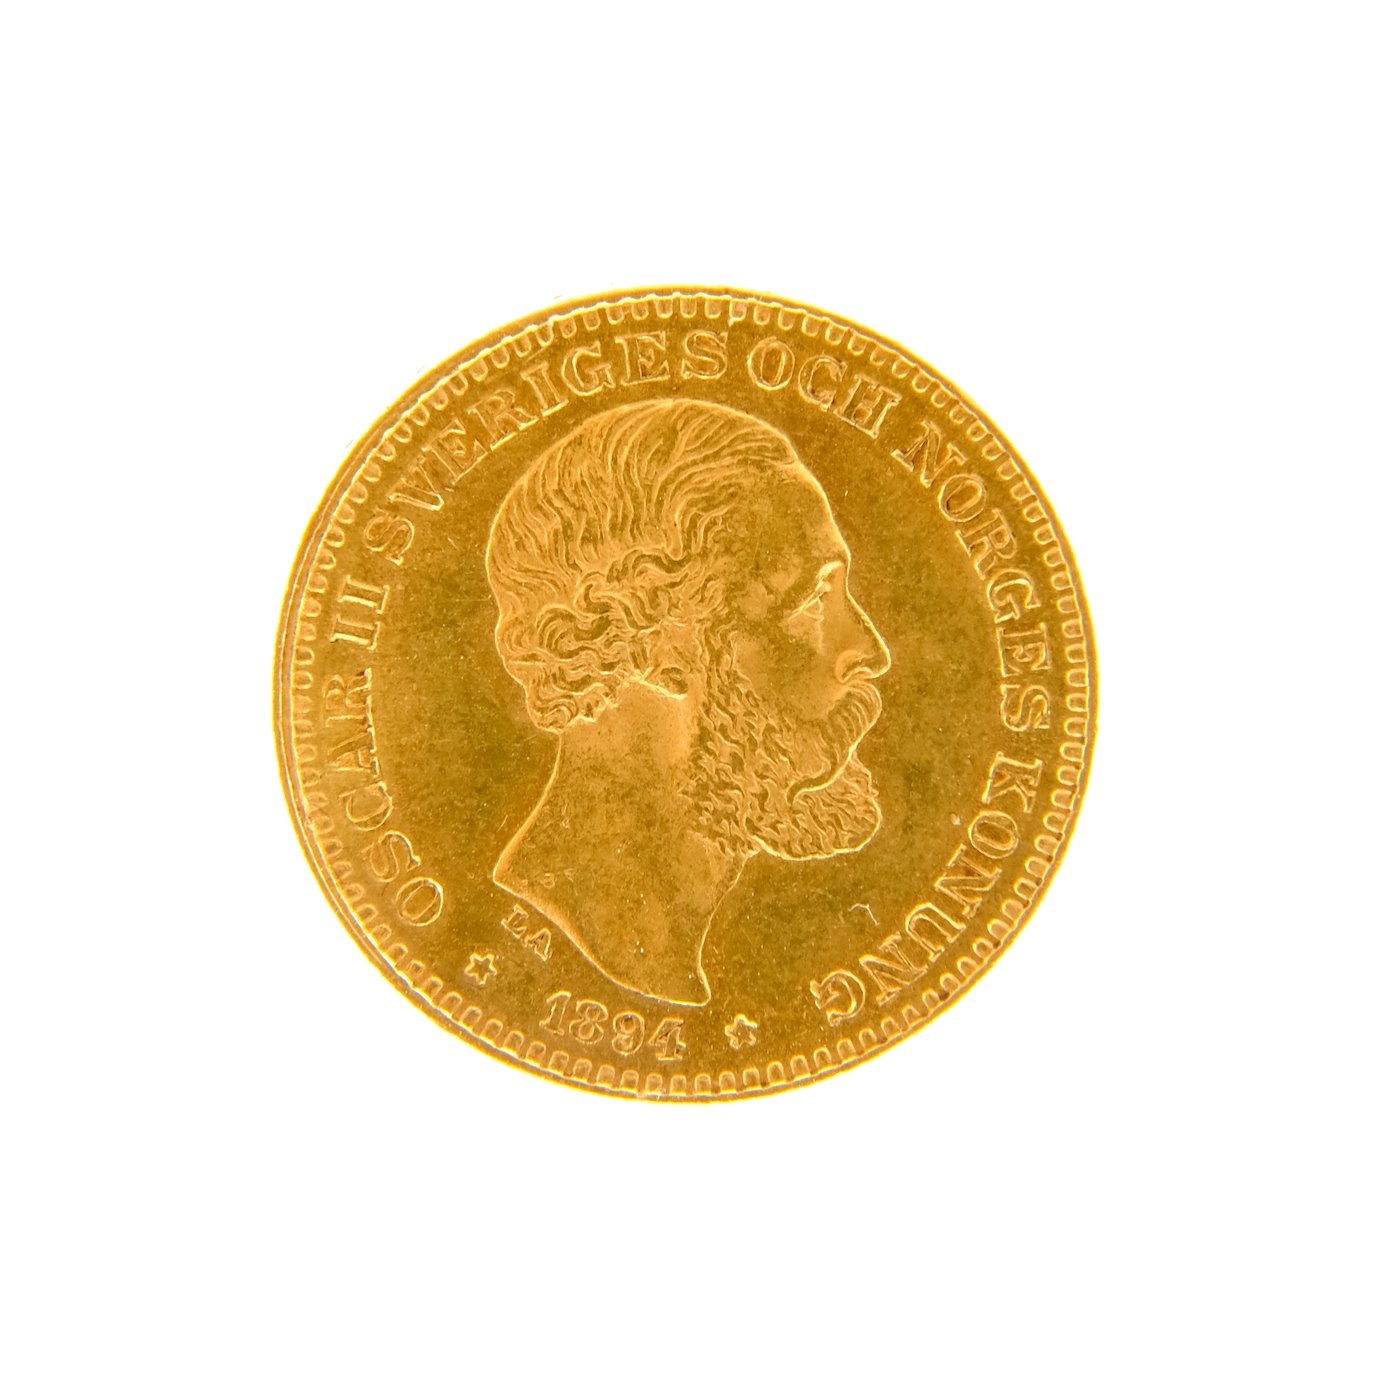 .. - Zlato NORSKO 10 Koruna 1894 EB král OSKAR II., zlato 900/1000, hrubá hmotnost 4,48g